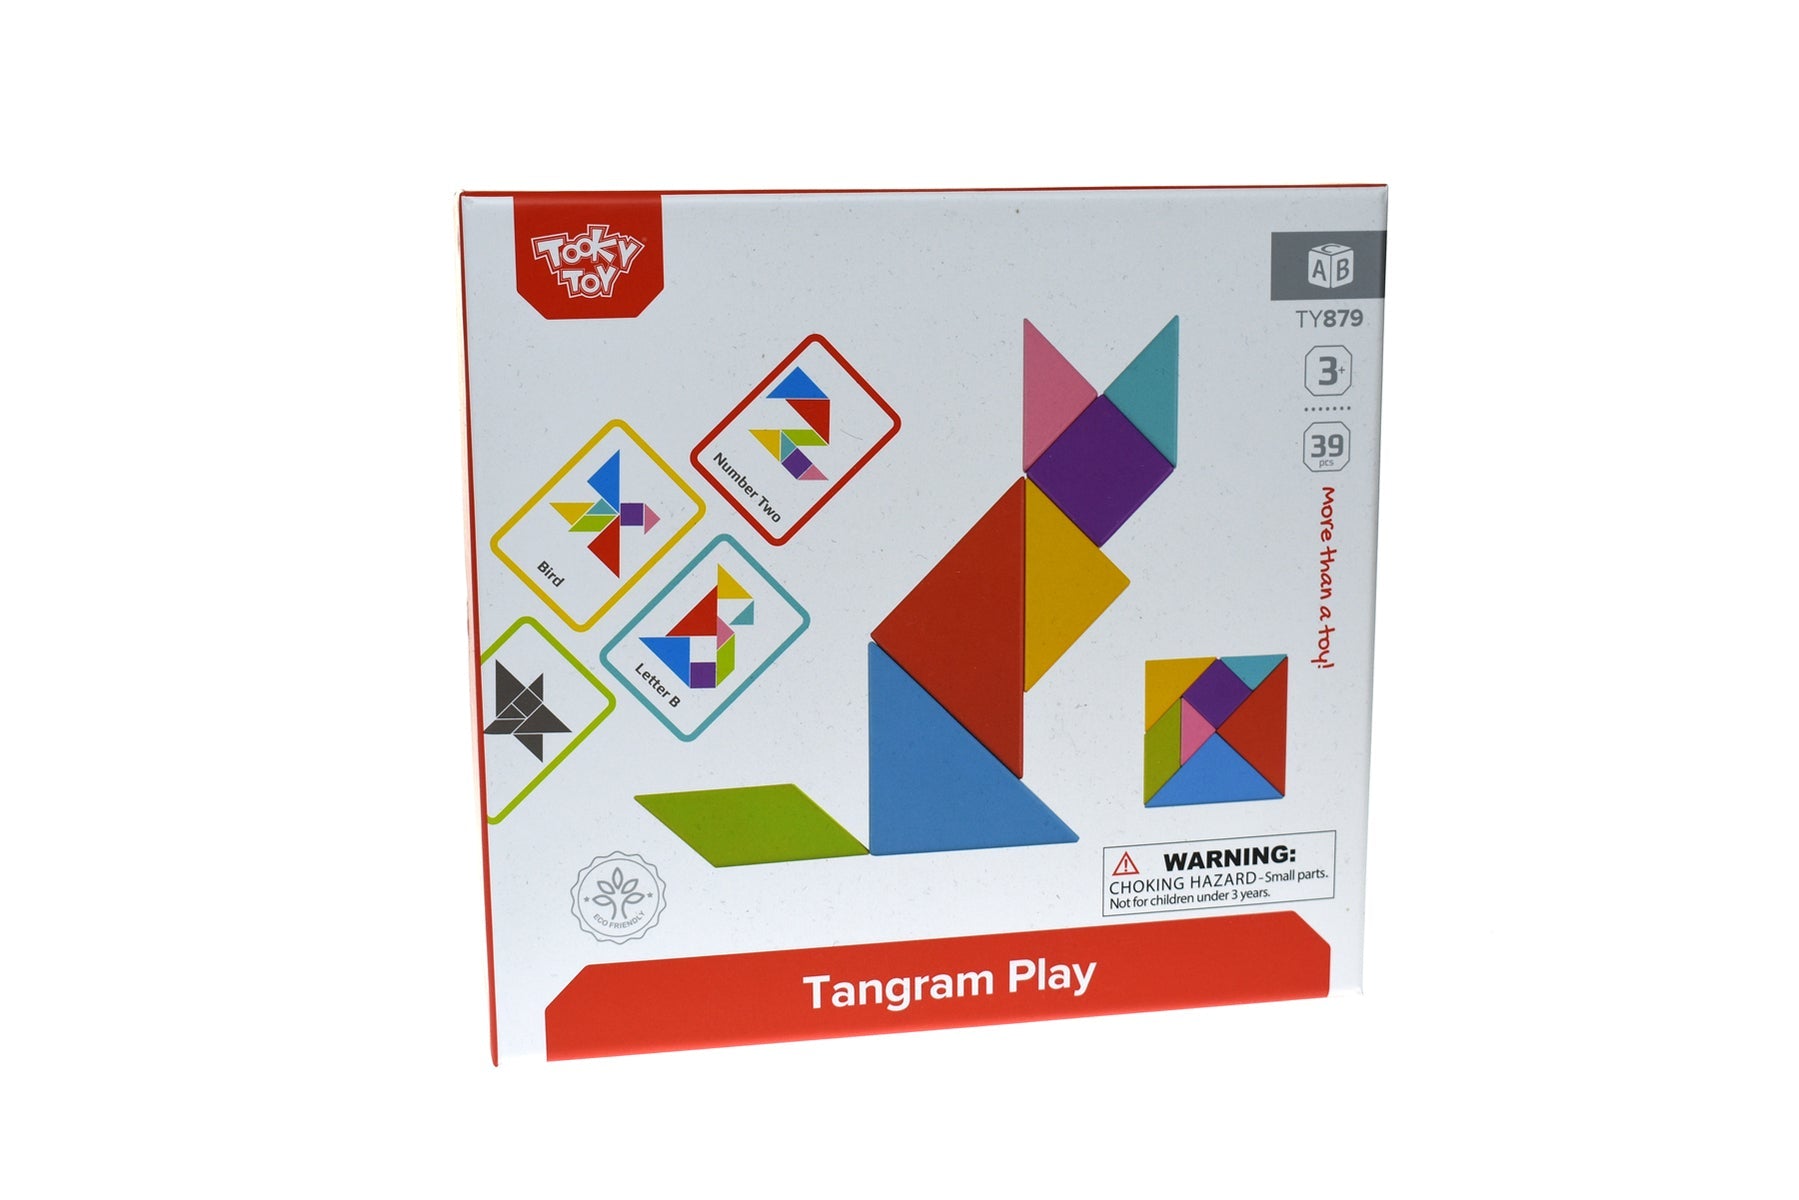 Tangram Play Wooden Brainteaser Puzzle